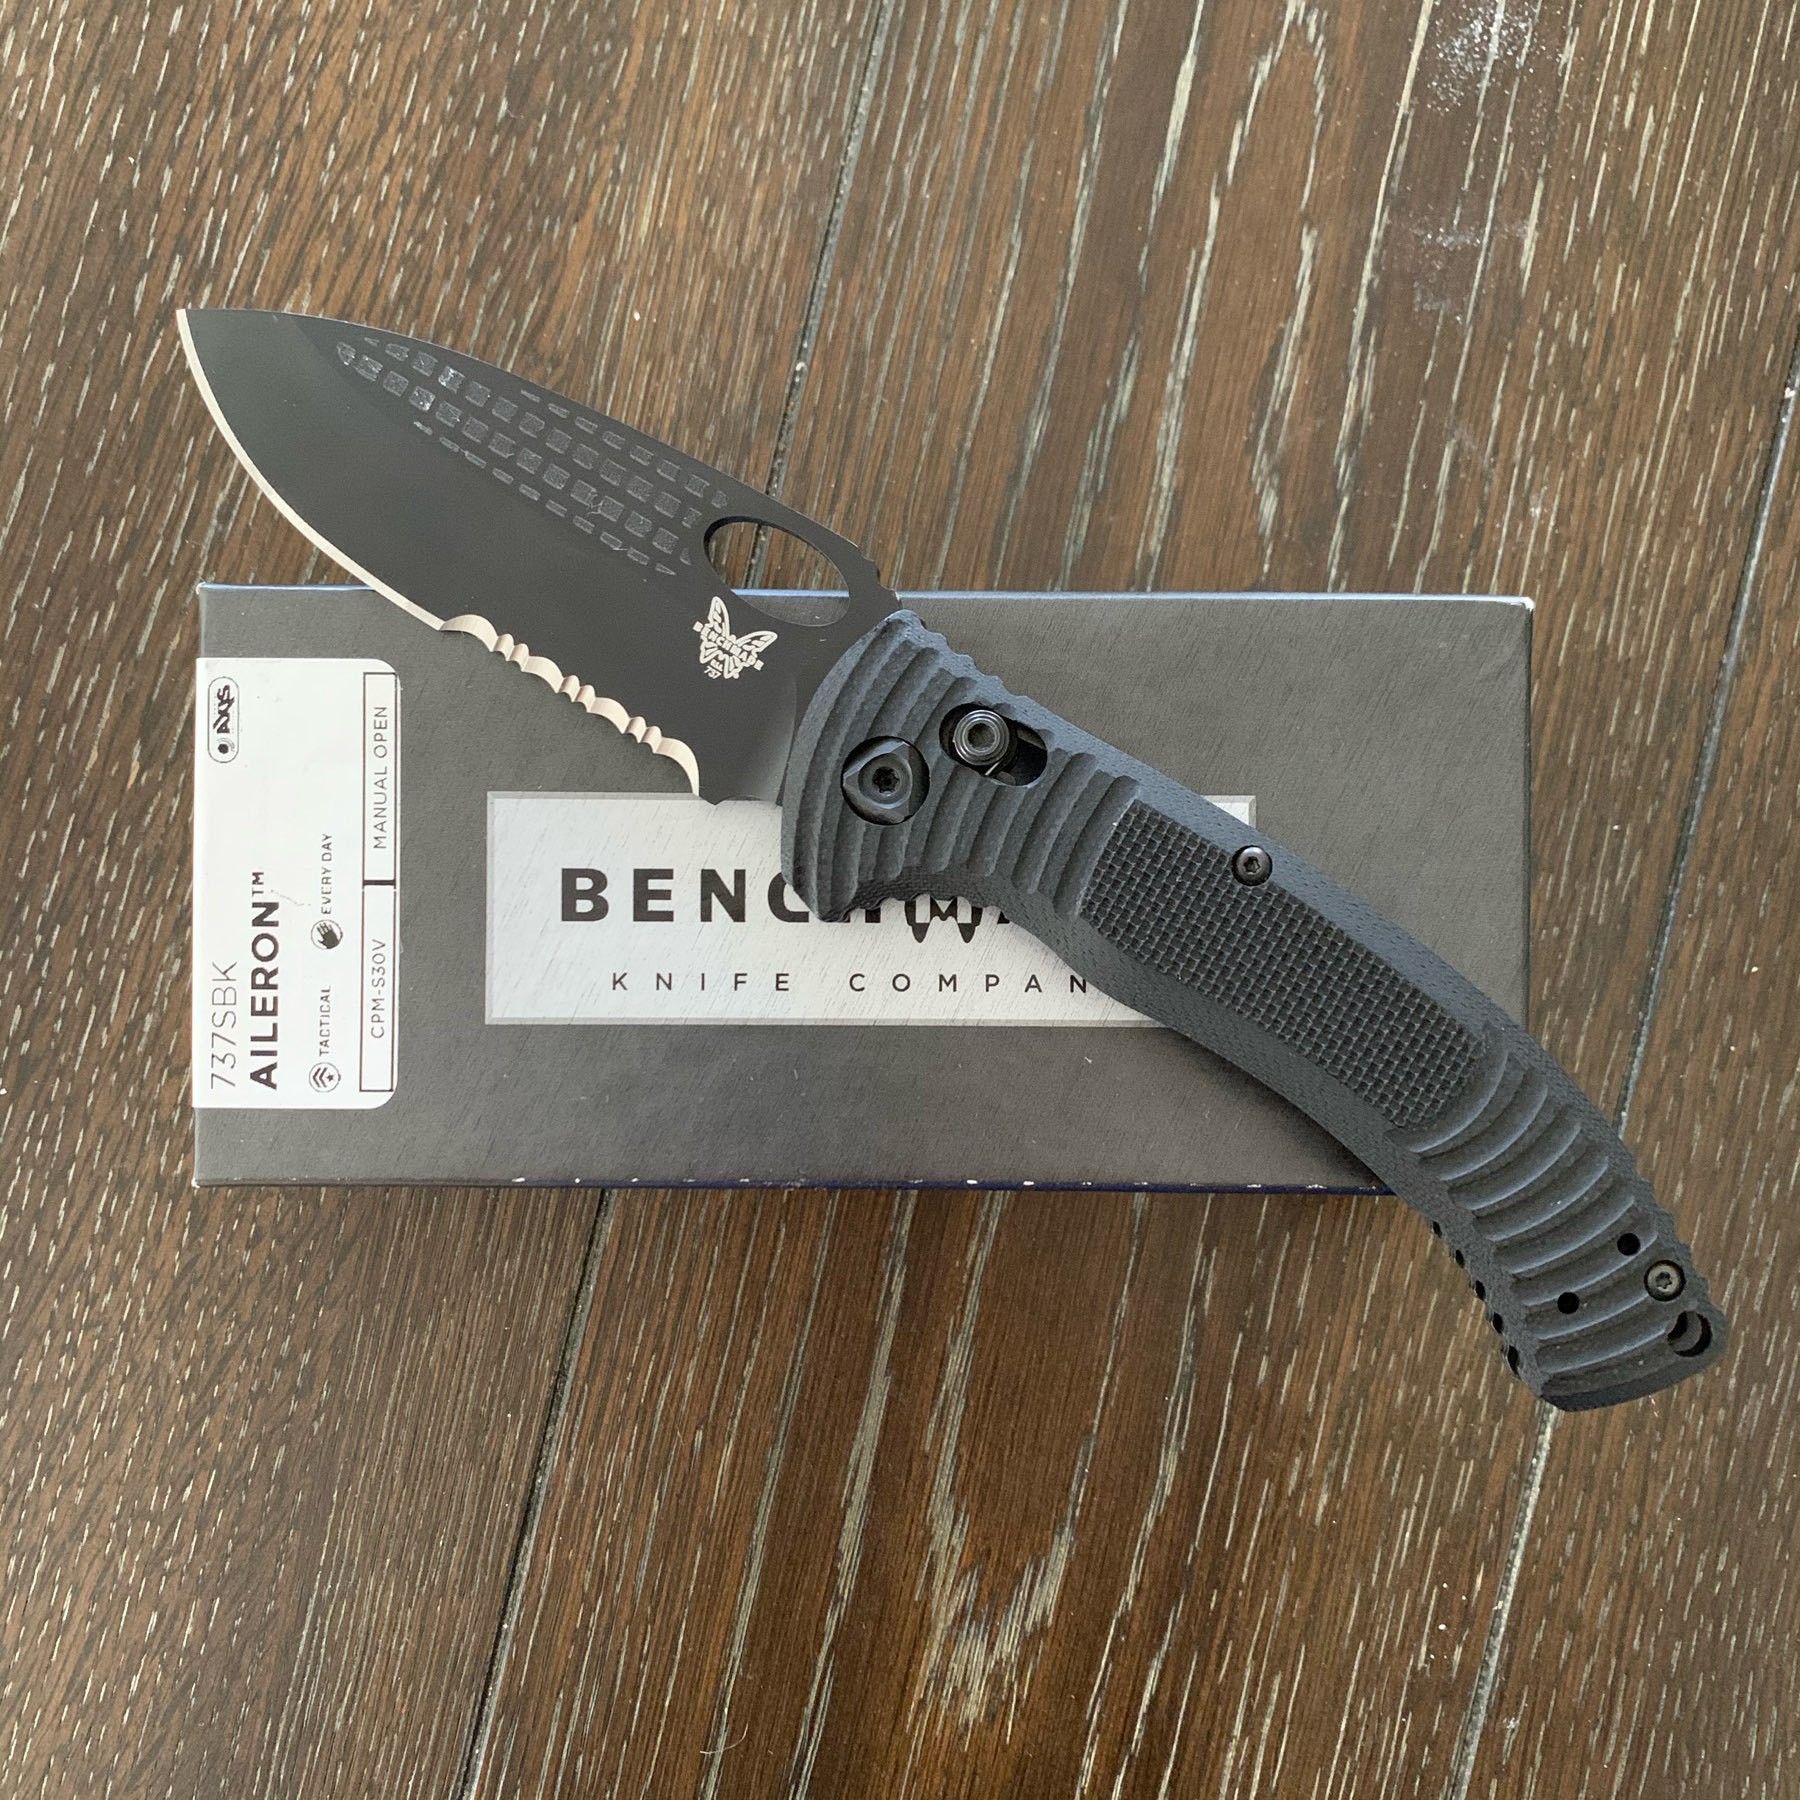 Benchmade 737 Aileron knife